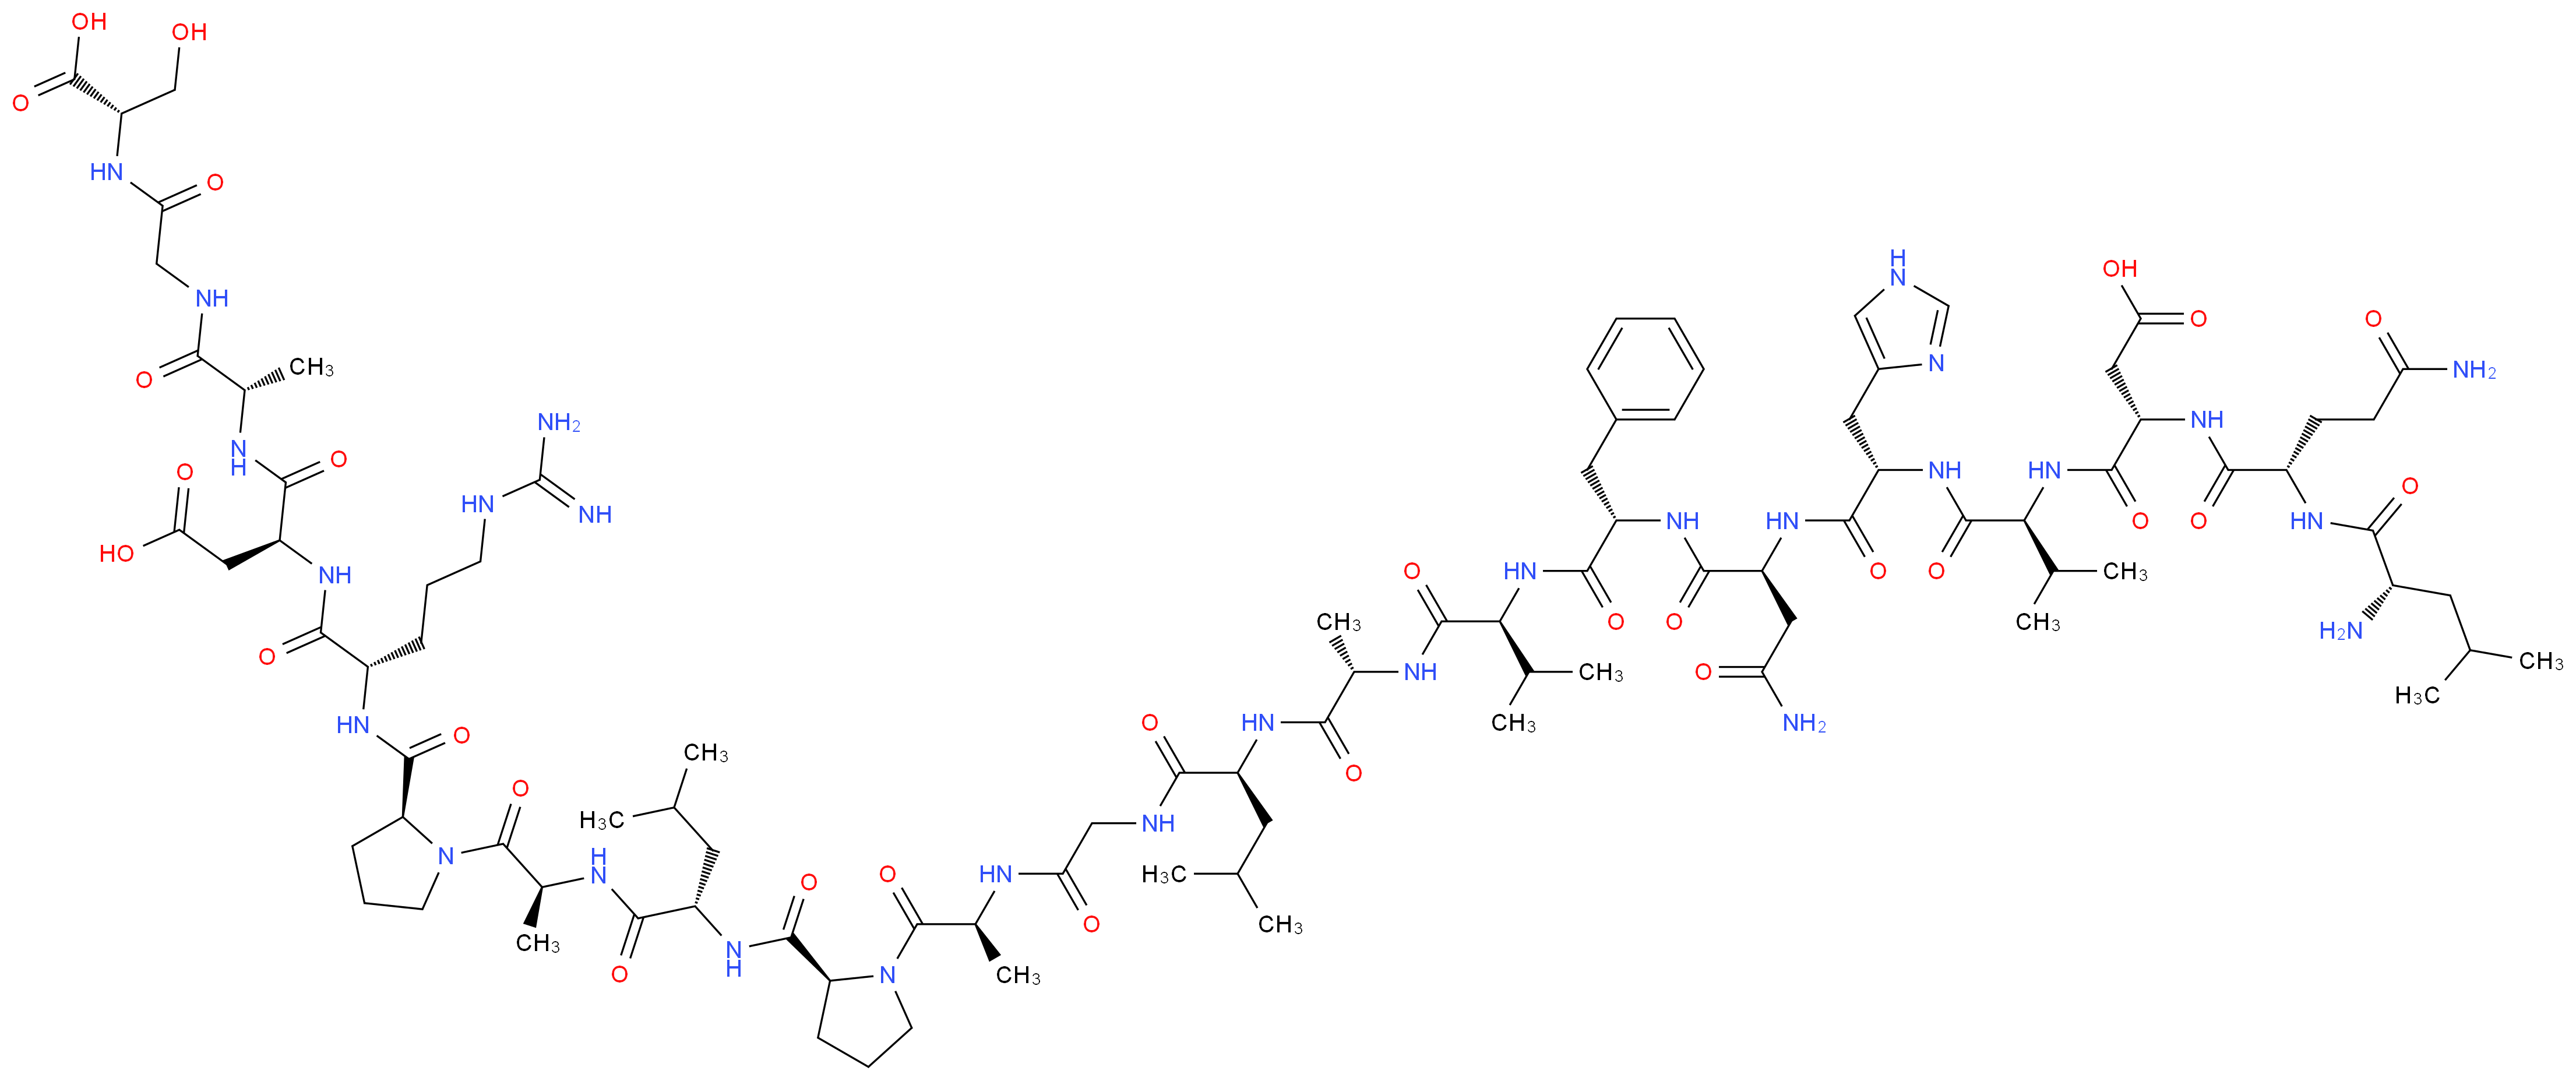 (3S)-3-[(2S)-2-[(2S)-2-amino-4-methylpentanamido]-4-carbamoylbutanamido]-3-{[(1S)-1-{[(1S)-1-{[(1S)-1-{[(1S)-1-{[(1S)-1-{[(1S)-1-{[(1S)-1-[({[(2S)-1-[(2S)-2-{[(1S)-1-{[(2S)-1-[(2S)-2-{[(1S)-4-carbamimidamido-1-{[(1S)-2-carboxy-1-{[(1S)-1-[({[(1S)-1-carboxy-2-hydroxyethyl]carbamoyl}methyl)carbamoyl]ethyl]carbamoyl}ethyl]carbamoyl}butyl]carbamoyl}pyrrolidin-1-yl]-1-oxopropan-2-yl]carbamoyl}-3-methylbutyl]carbamoyl}pyrrolidin-1-yl]-1-oxopropan-2-yl]carbamoyl}methyl)carbamoyl]-3-methylbutyl]carbamoyl}ethyl]carbamoyl}-2-methylpropyl]carbamoyl}-2-phenylethyl]carbamoyl}-2-carbamoylethyl]carbamoyl}-2-(1H-imidazol-4-yl)ethyl]carbamoyl}-2-methylpropyl]carbamoyl}propanoic acid_分子结构_CAS_83286-22-0